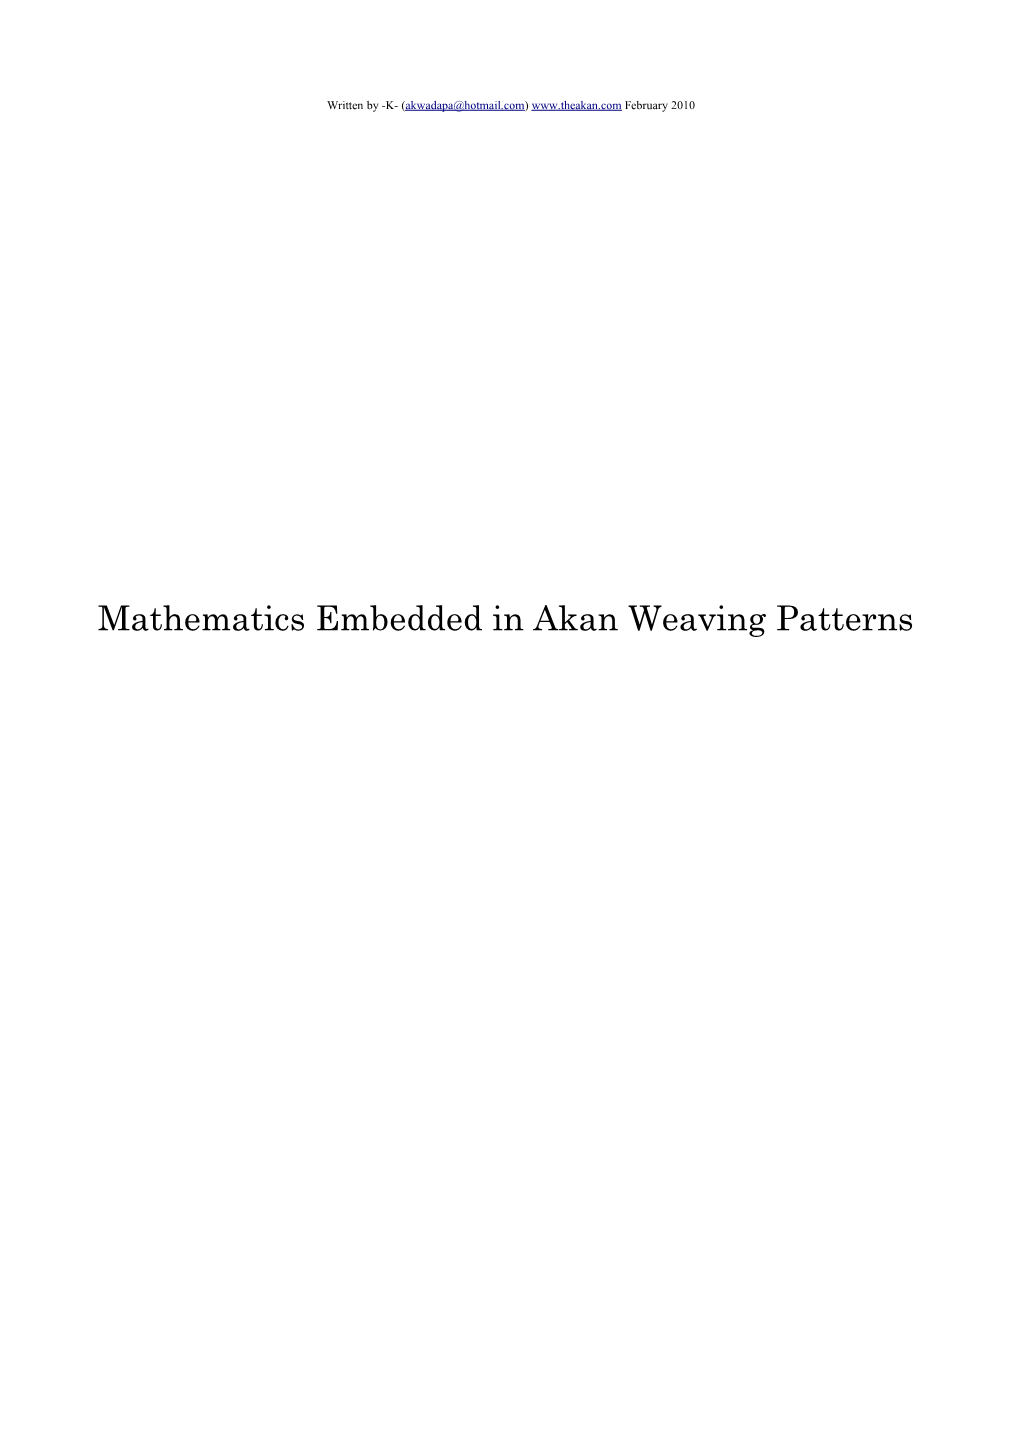 Mathematics Embedded in Akan Weaving Patterns Written by -K- (Akwadapa@Hotmail.Com) February 2010